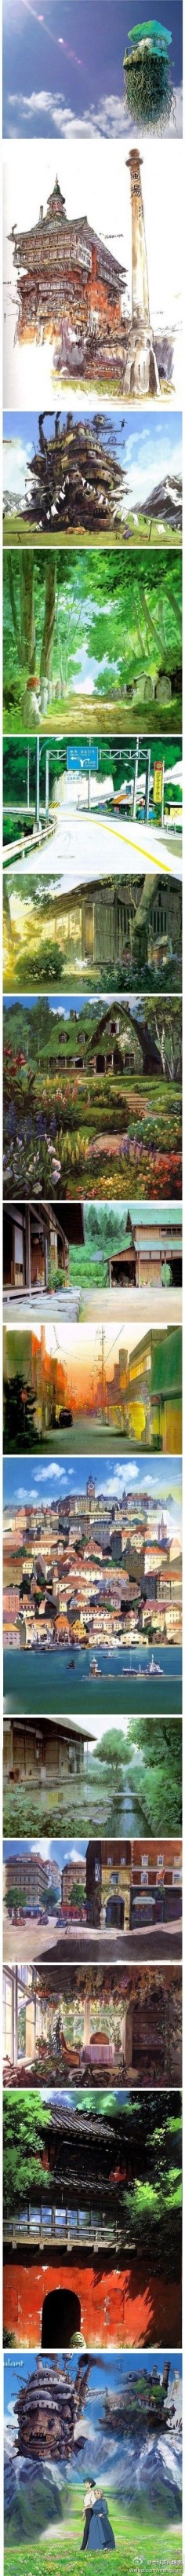 Background layout art in Hayao Miyazaki films.